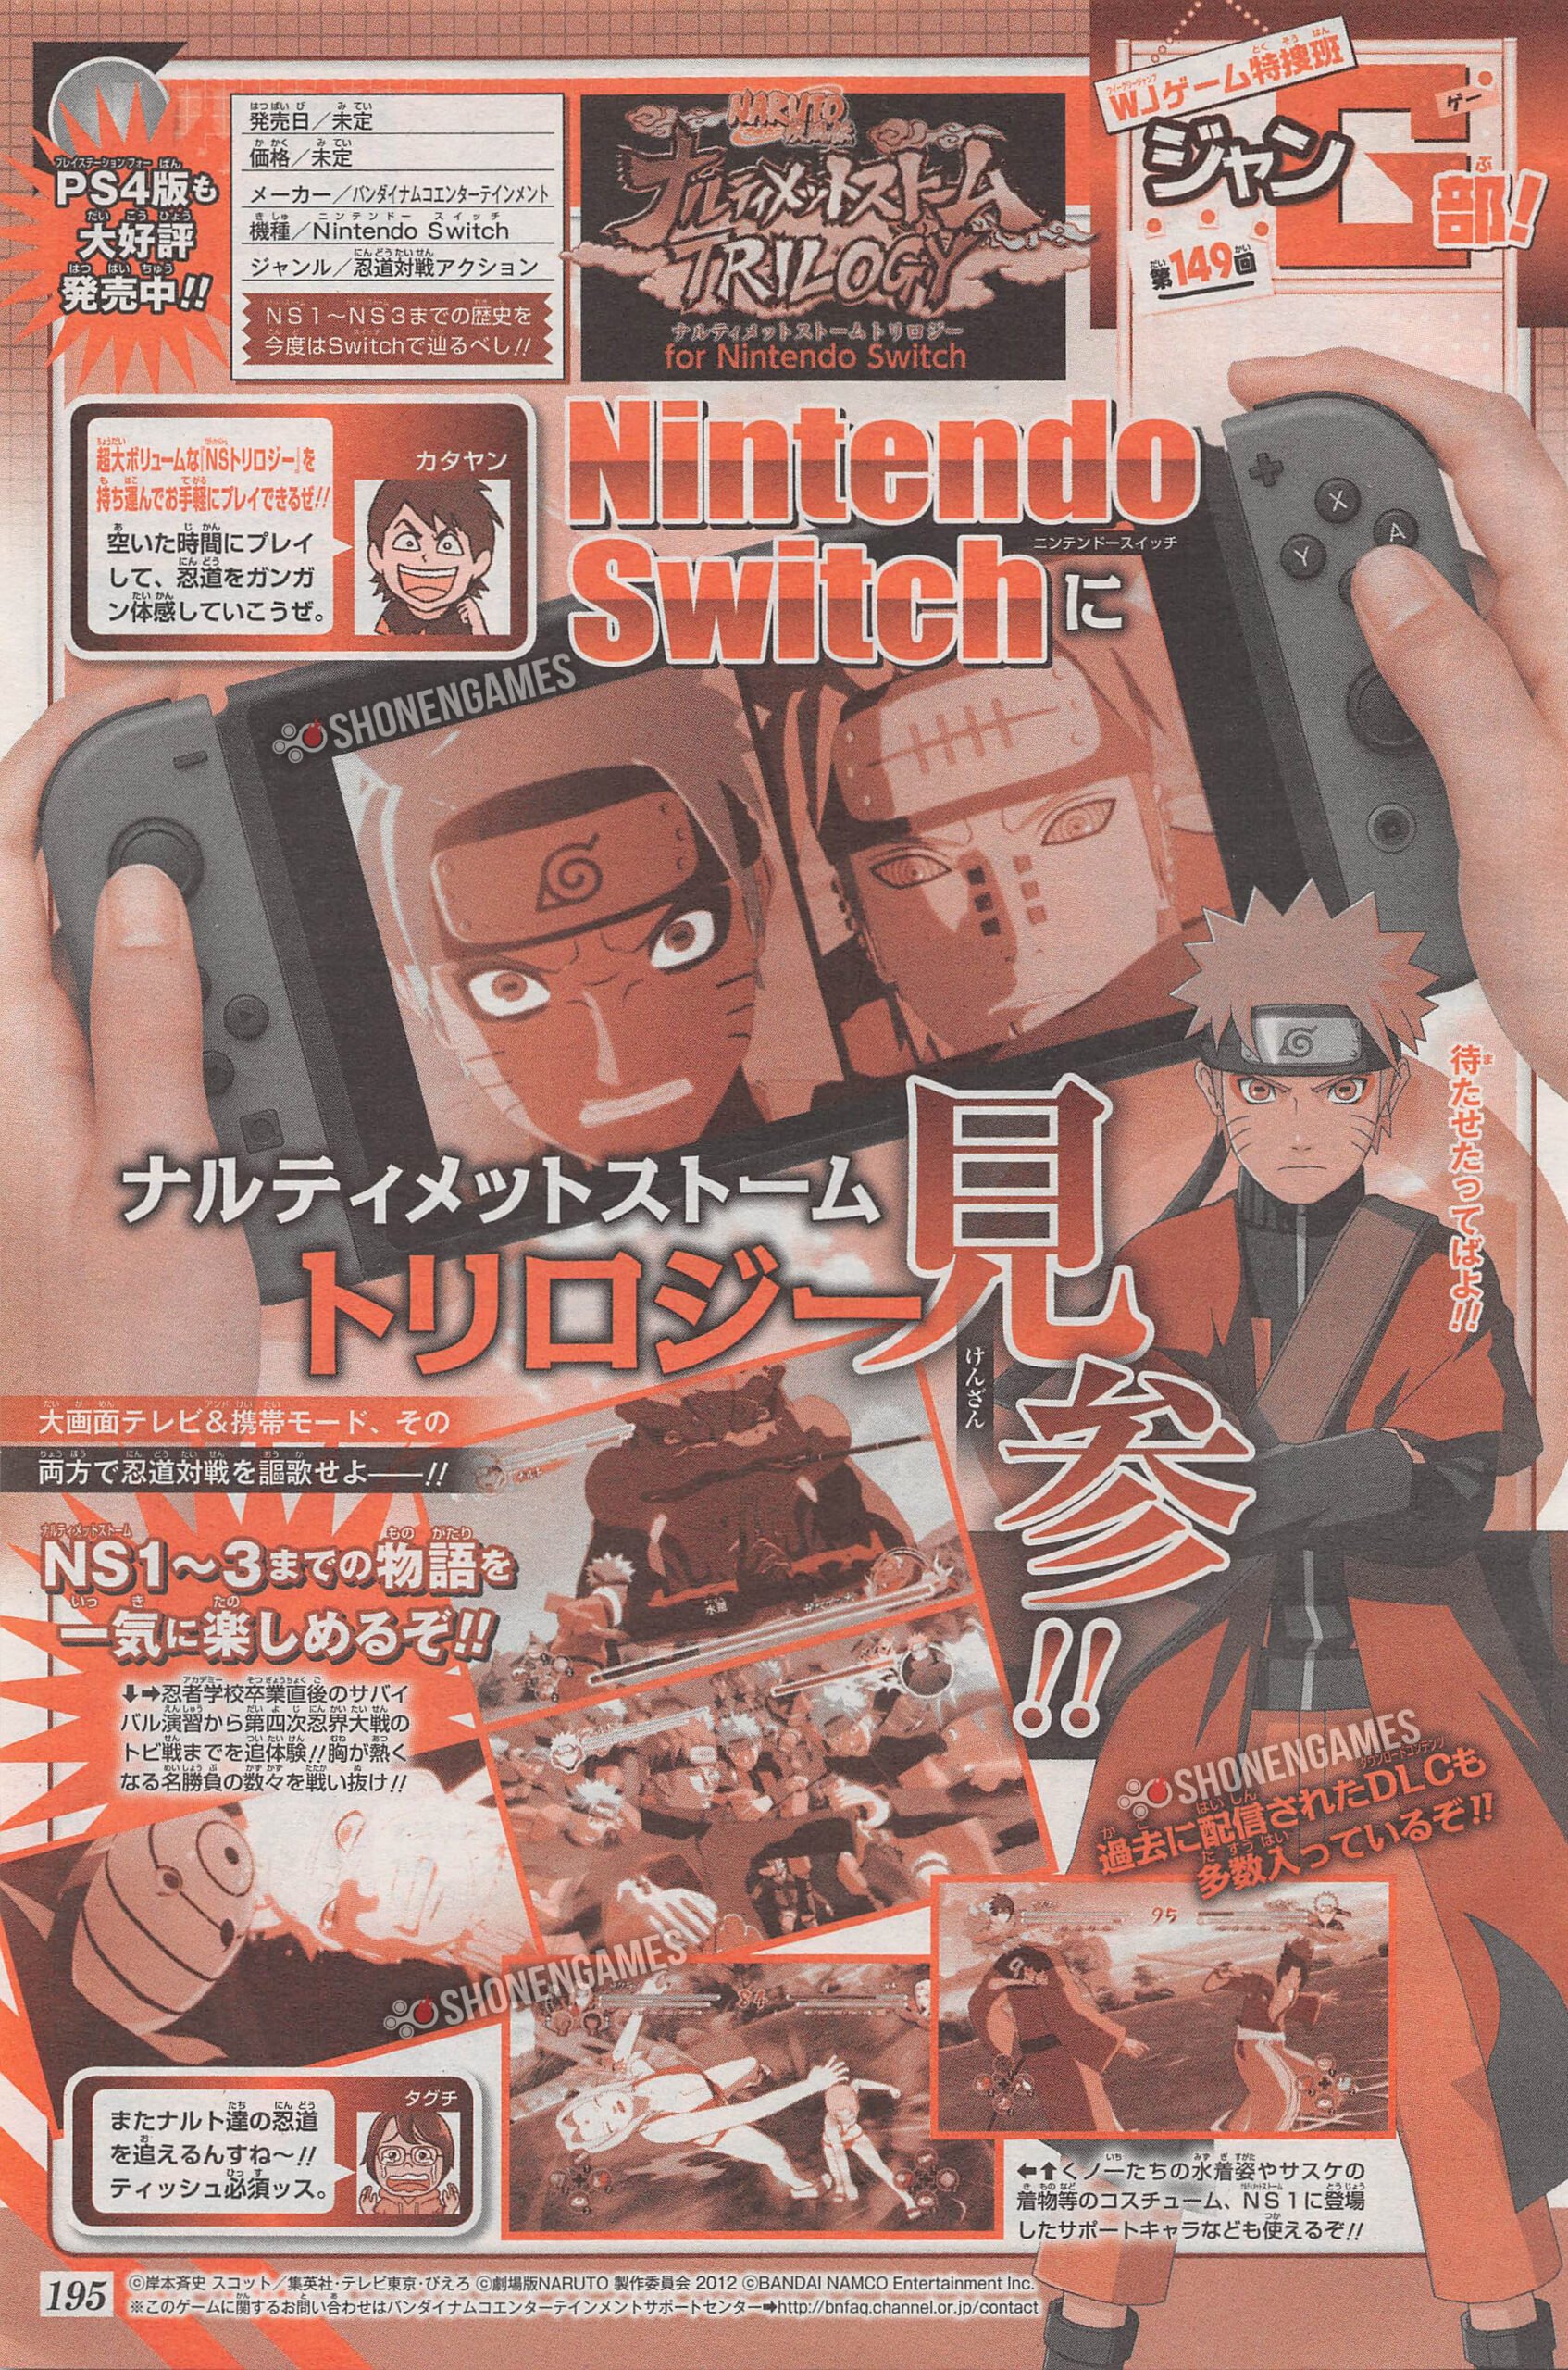 Gematsu Shippuden: to Naruto Ultimate Storm coming Switch Ninja Trilogy [Update] -